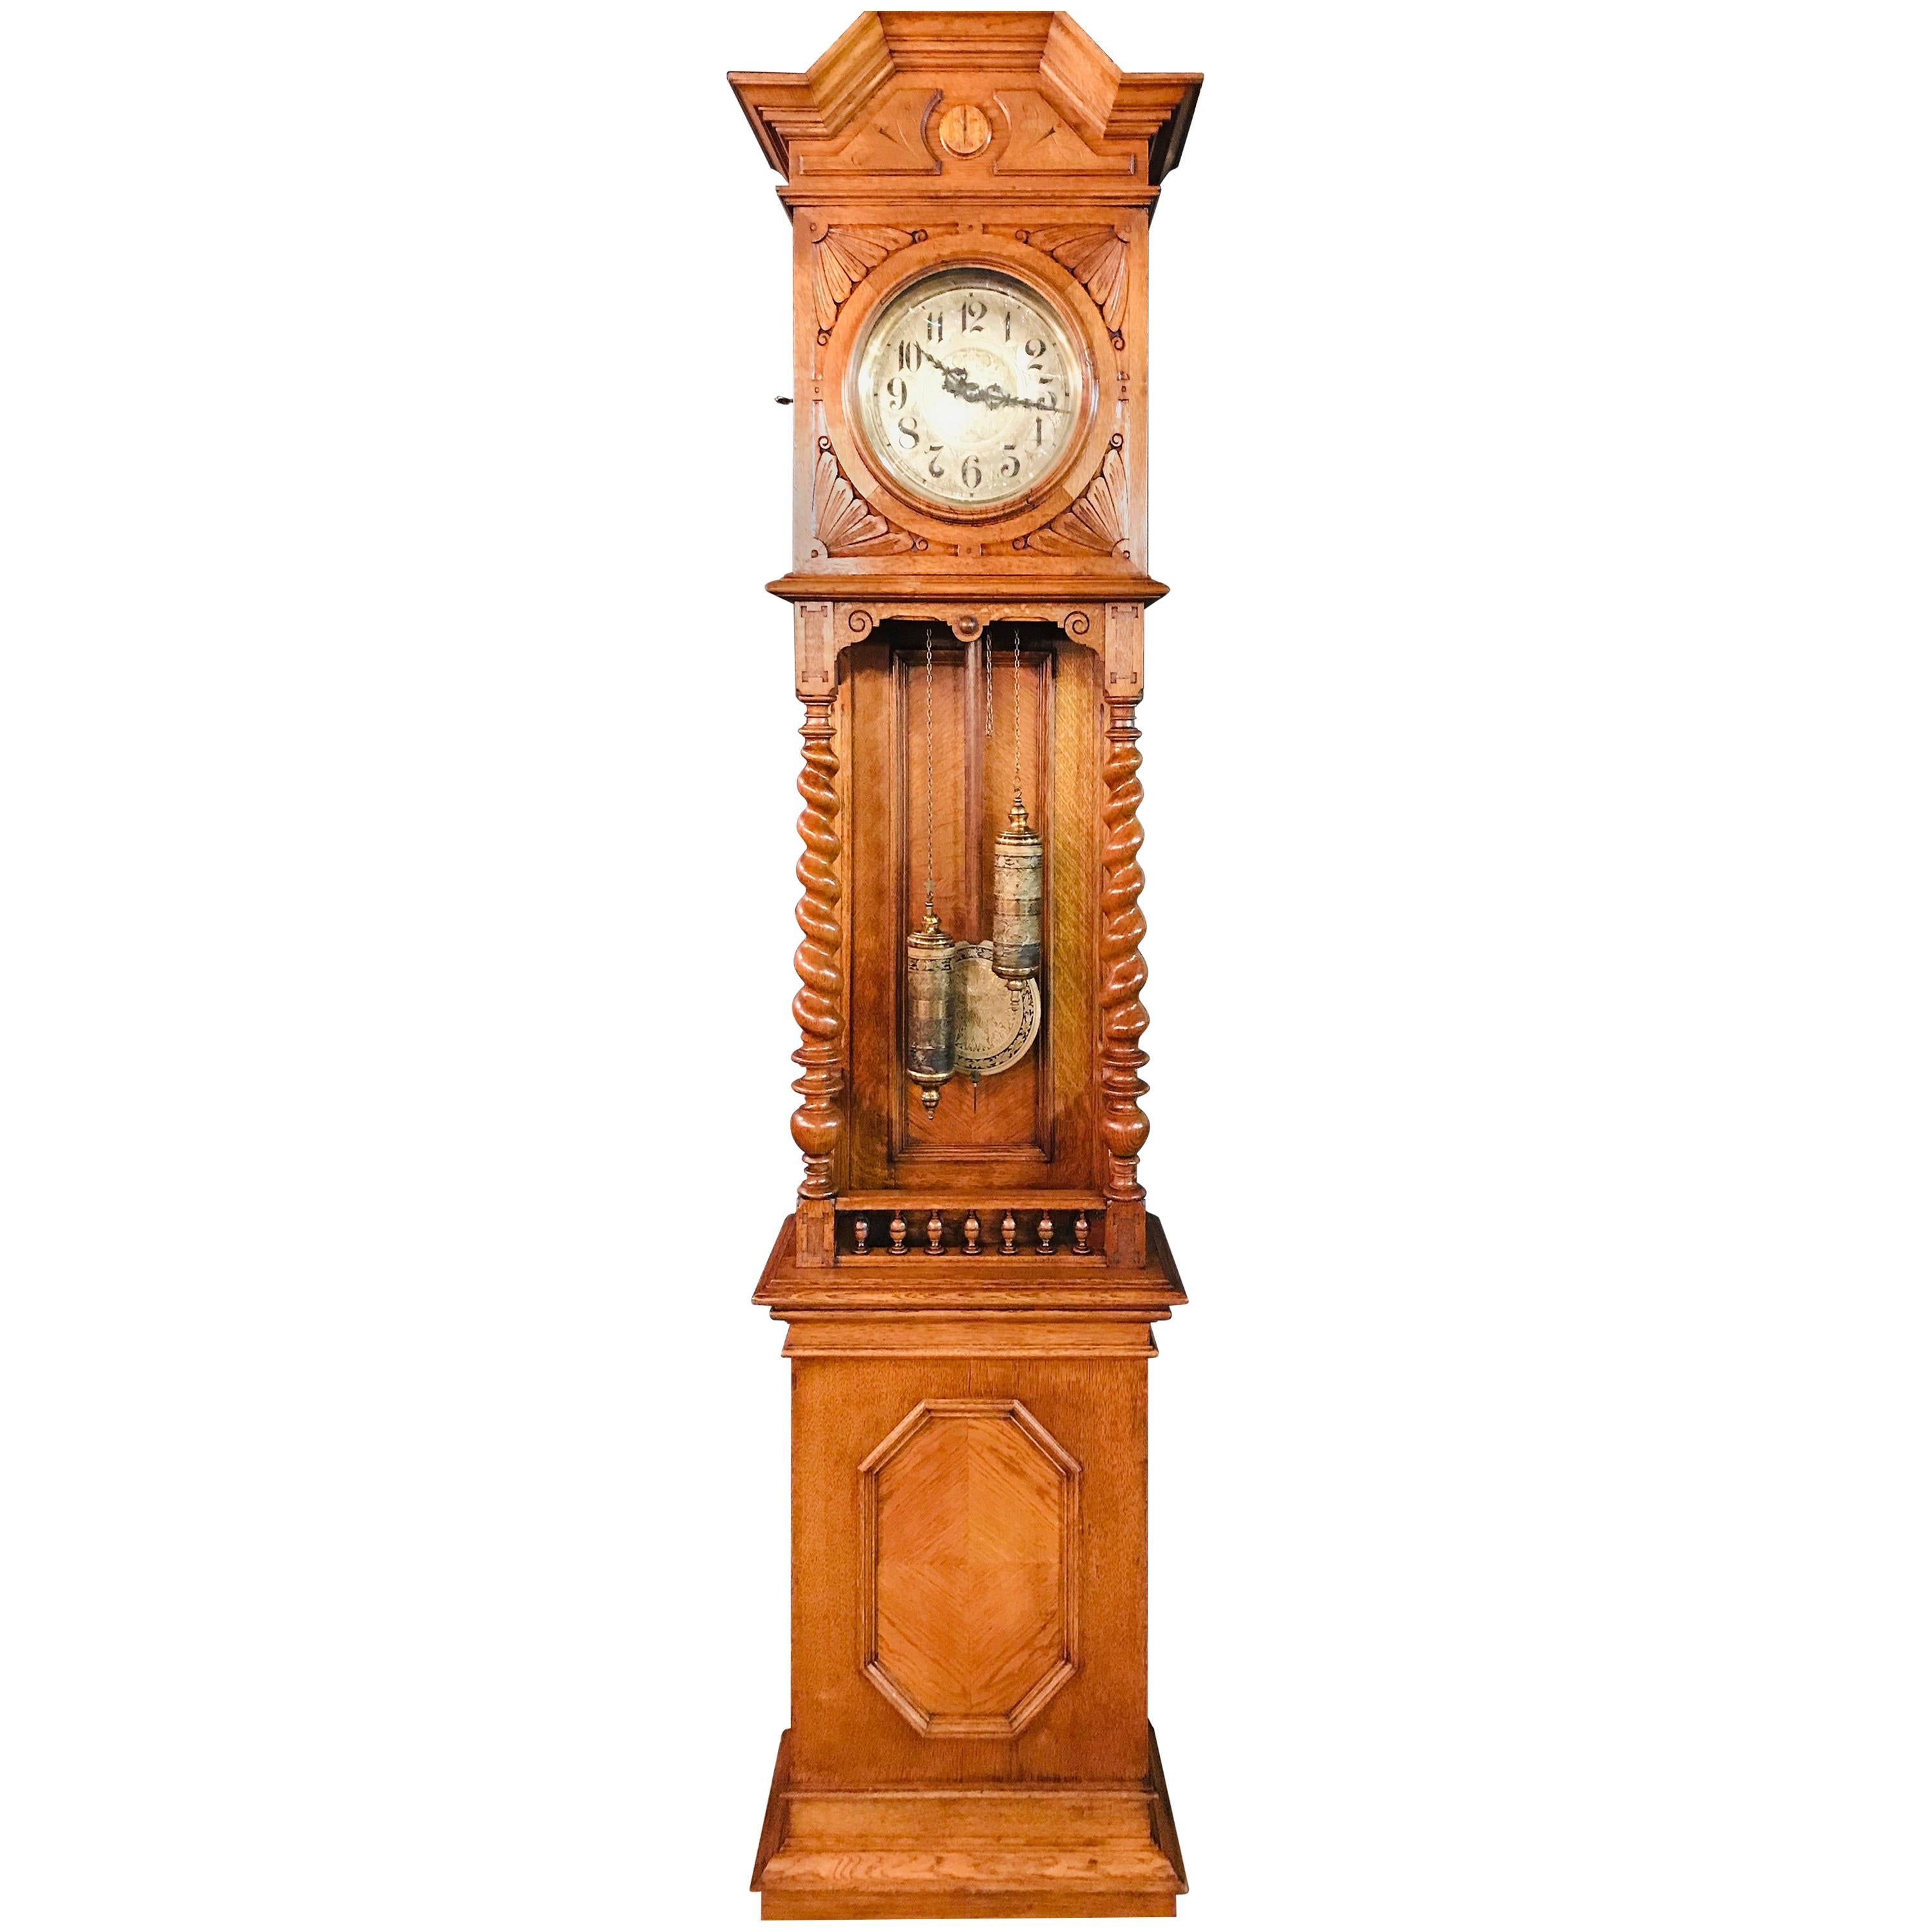 Very Nice Wilhelminian Style Grandfather Clock Open, circa 1860